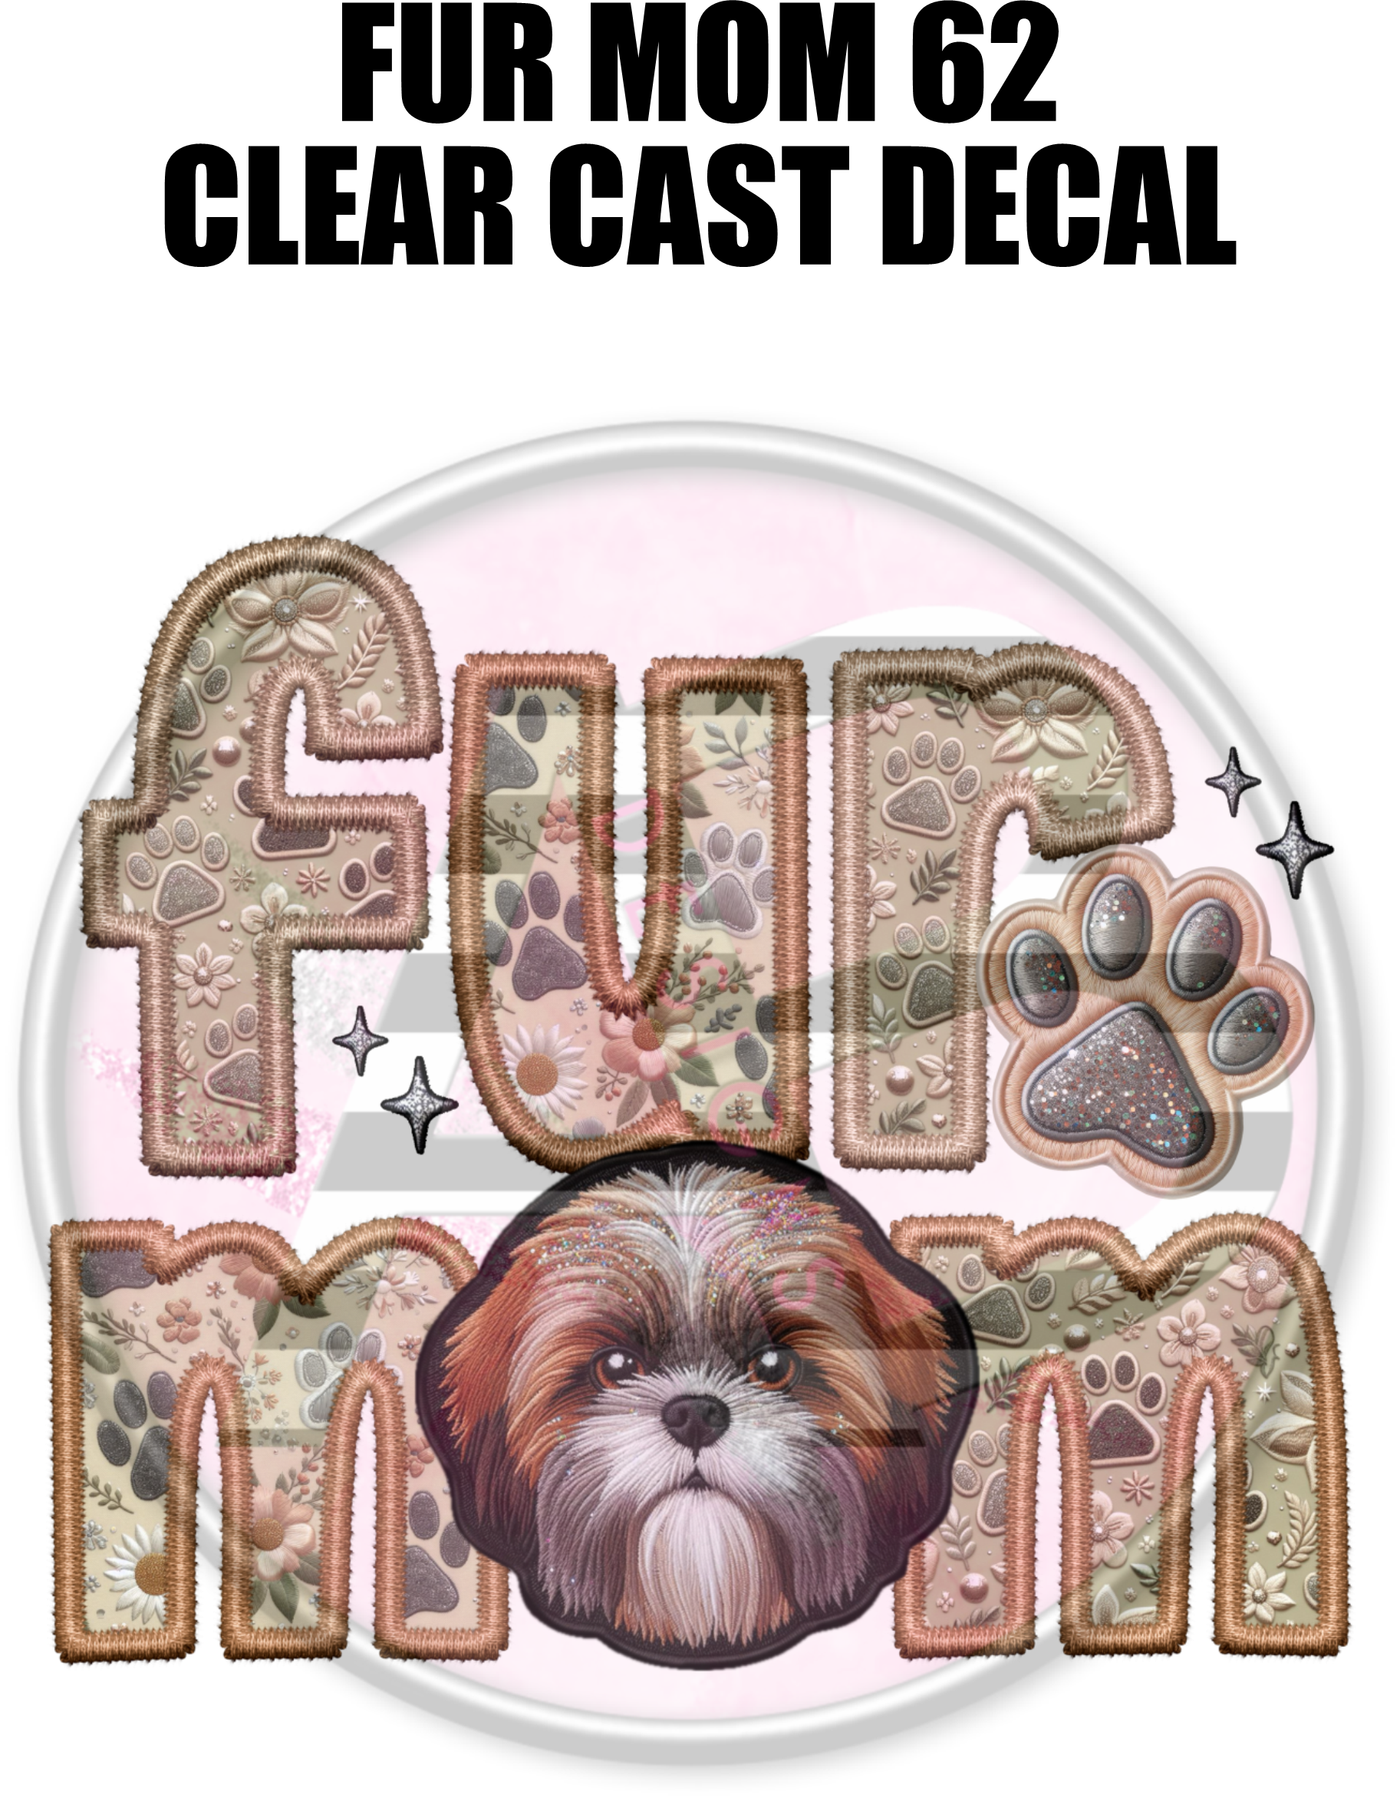 Fur Mom 62 - Clear Cast Decal